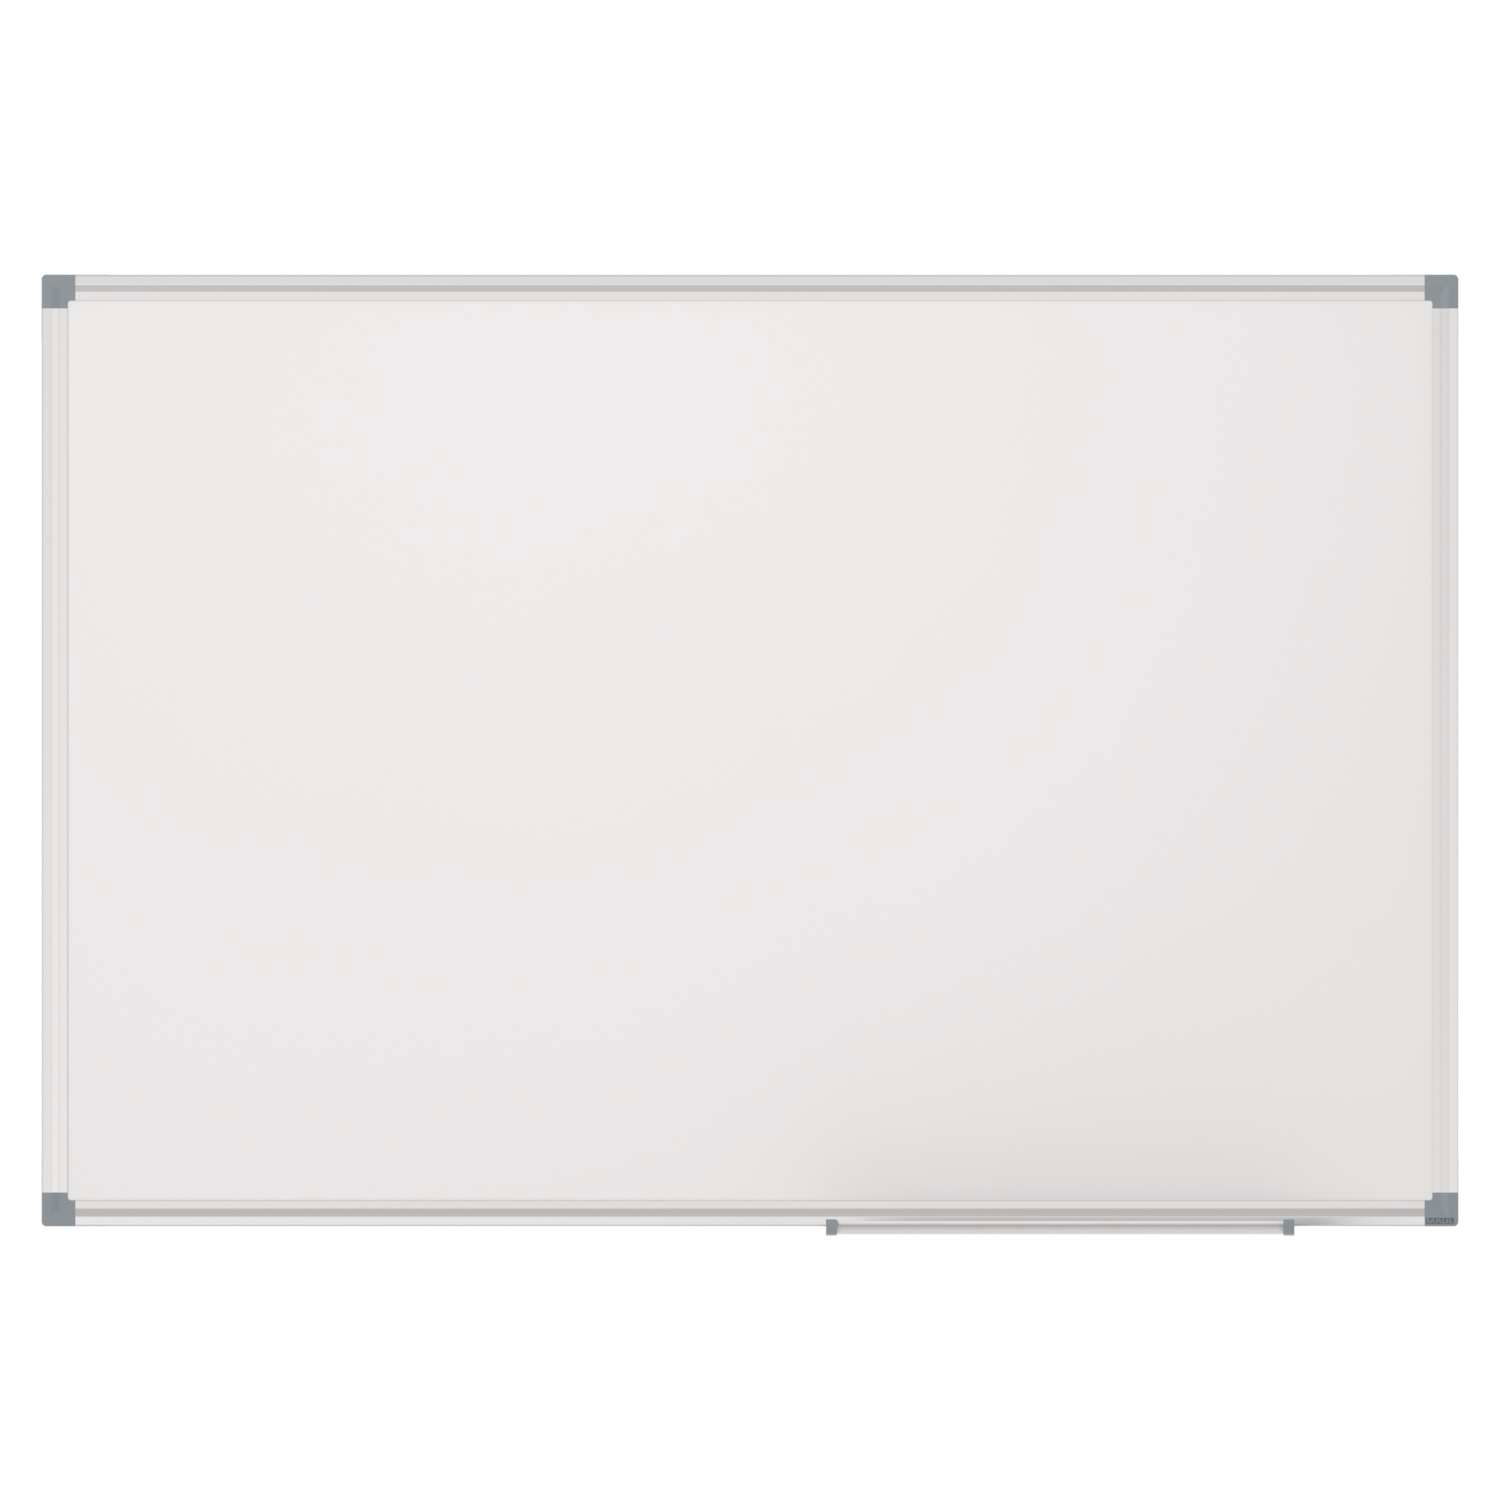 Whiteboard MAULstandard, 120x200 cm